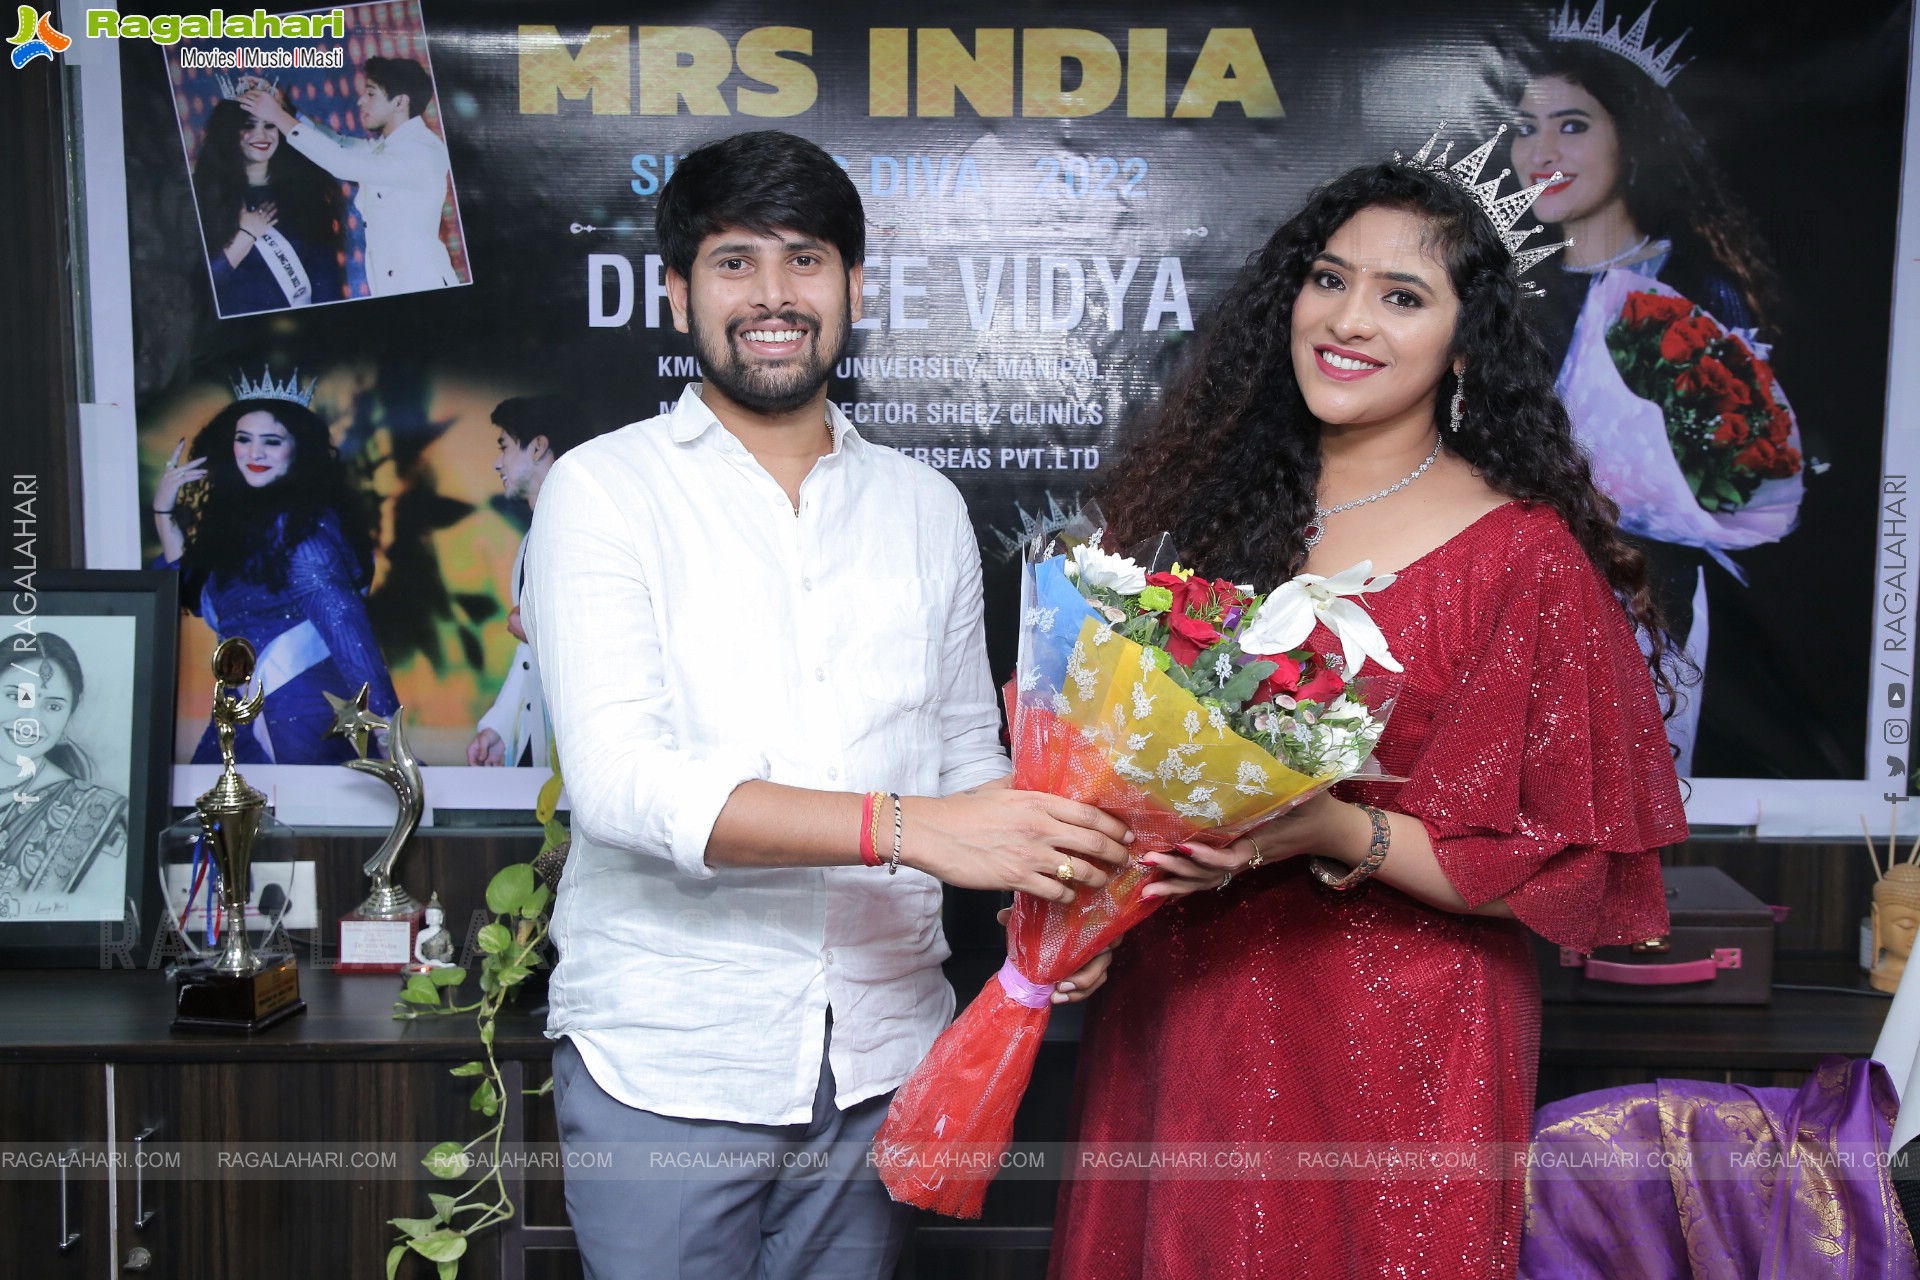 Tête-à-Tête with Mrs. India 2022 Sizzling Diva Title Winner Dr. Sree Vidya